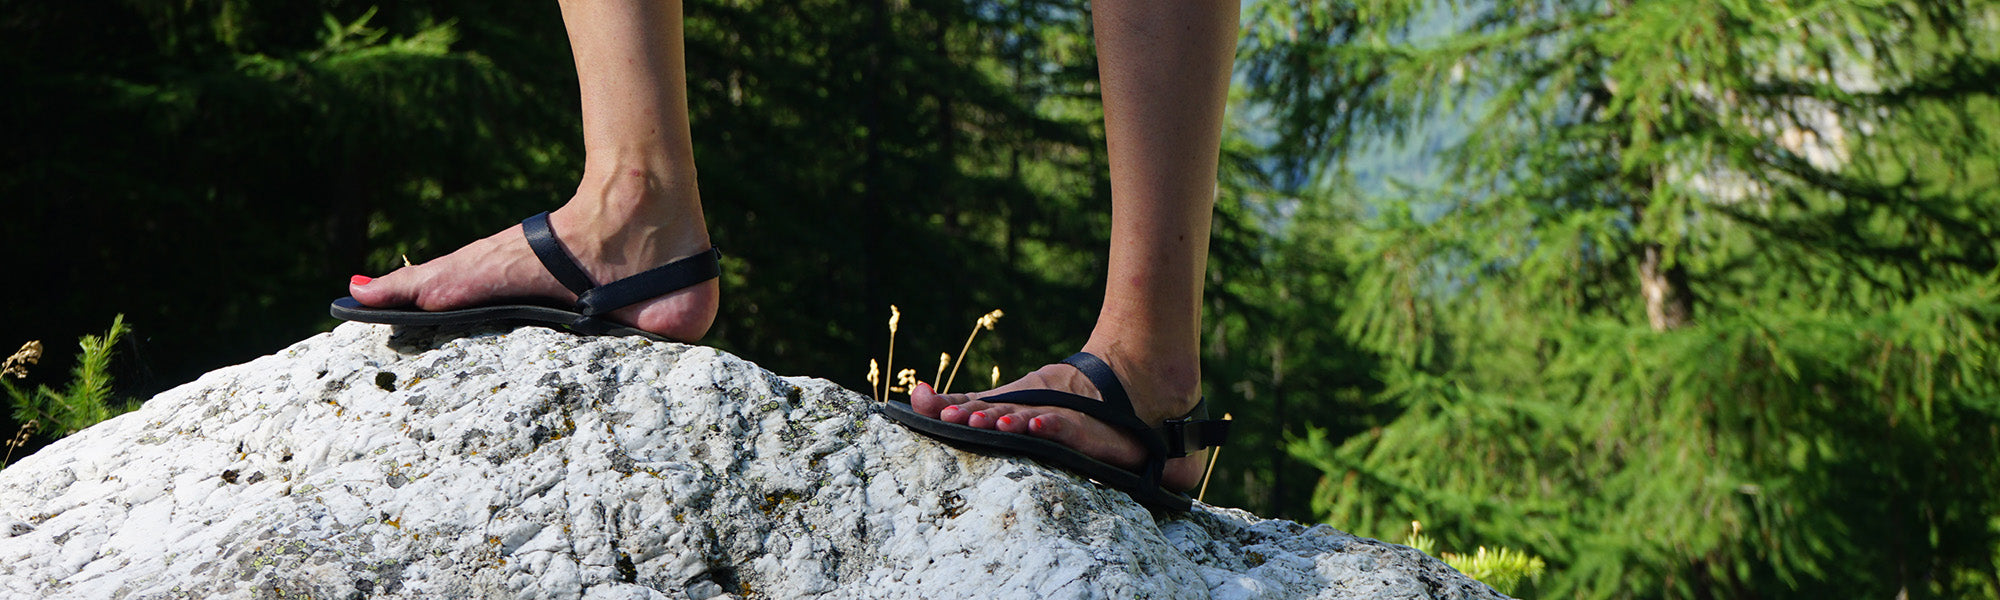 10 Best Affordable, Vegan, Minimalist Barefoot Sandals | Strappy sandals,  White block heel sandals, Bare foot sandals